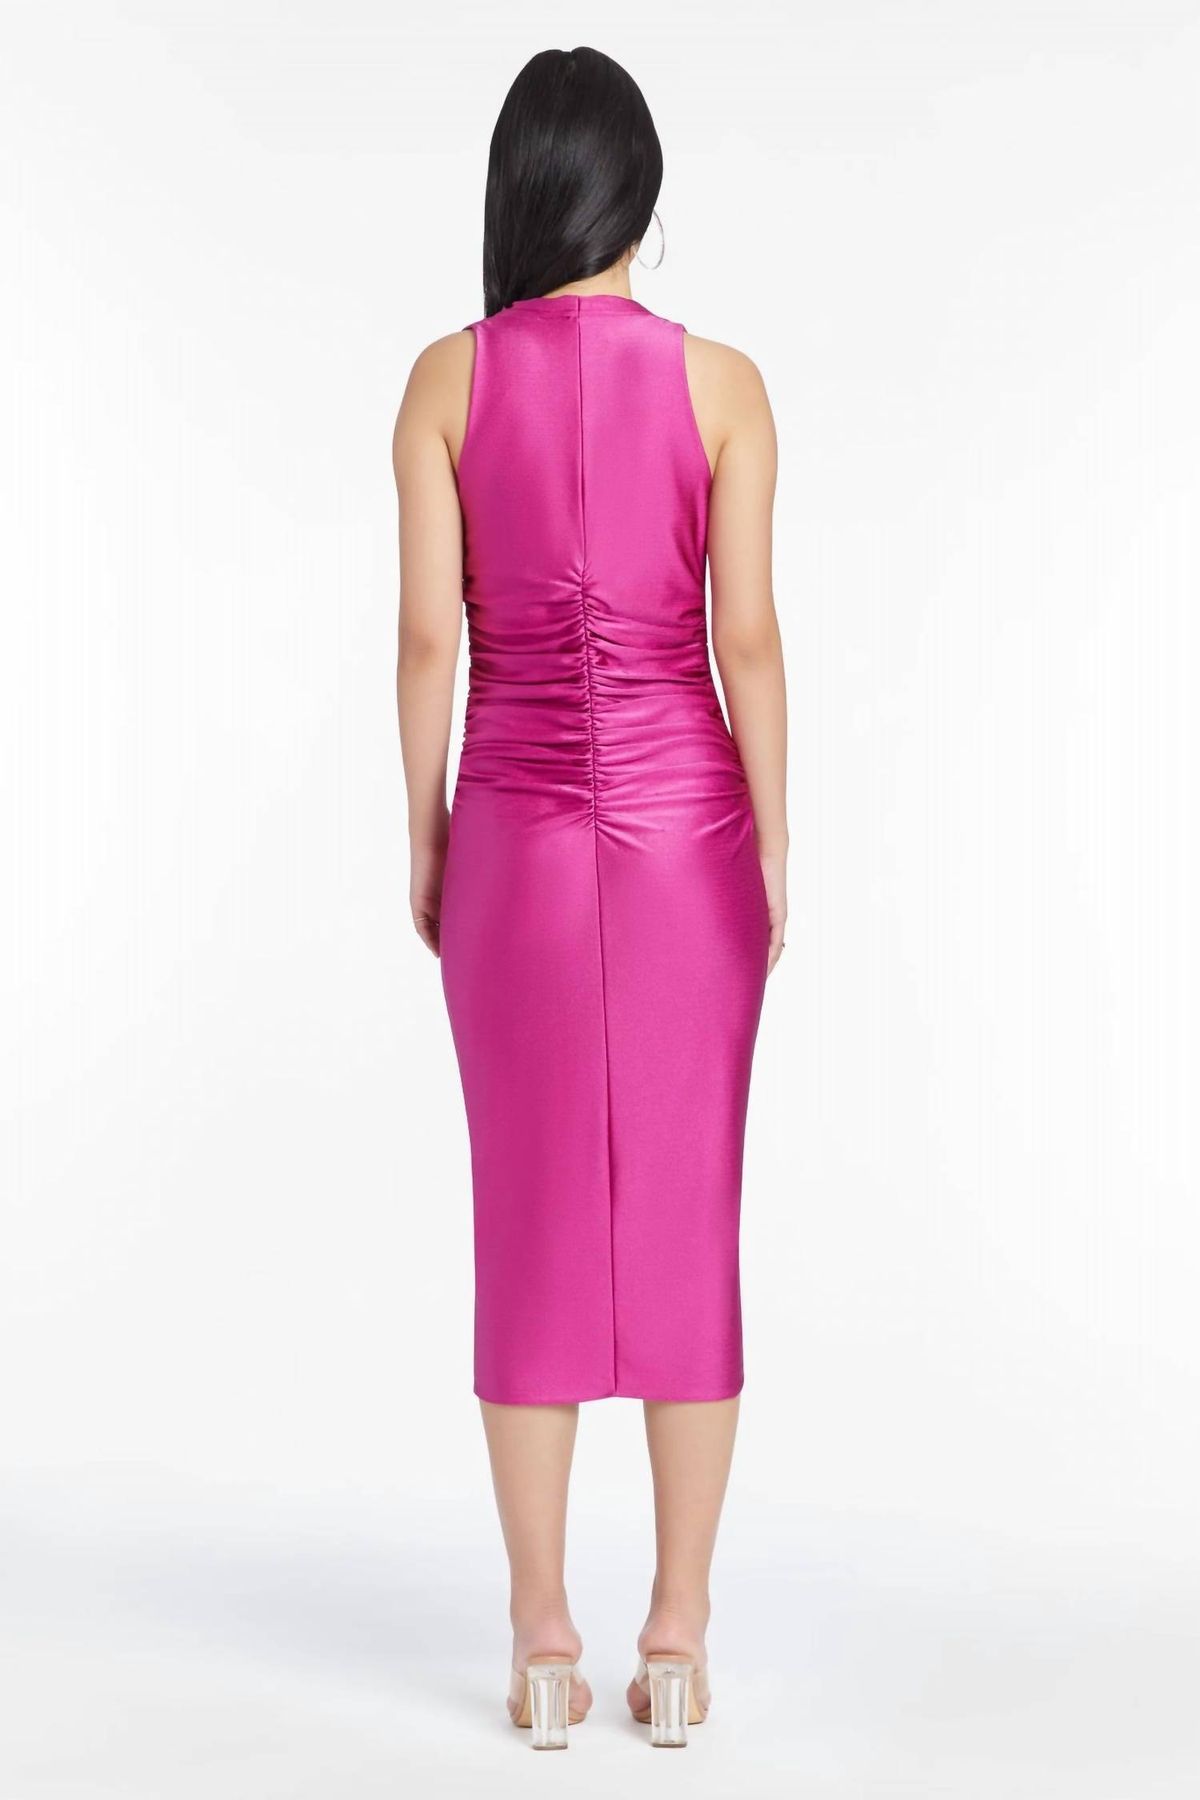 Style 1-1693116390-2901 Amanda Uprichard Size M Nightclub Satin Hot Pink Cocktail Dress on Queenly